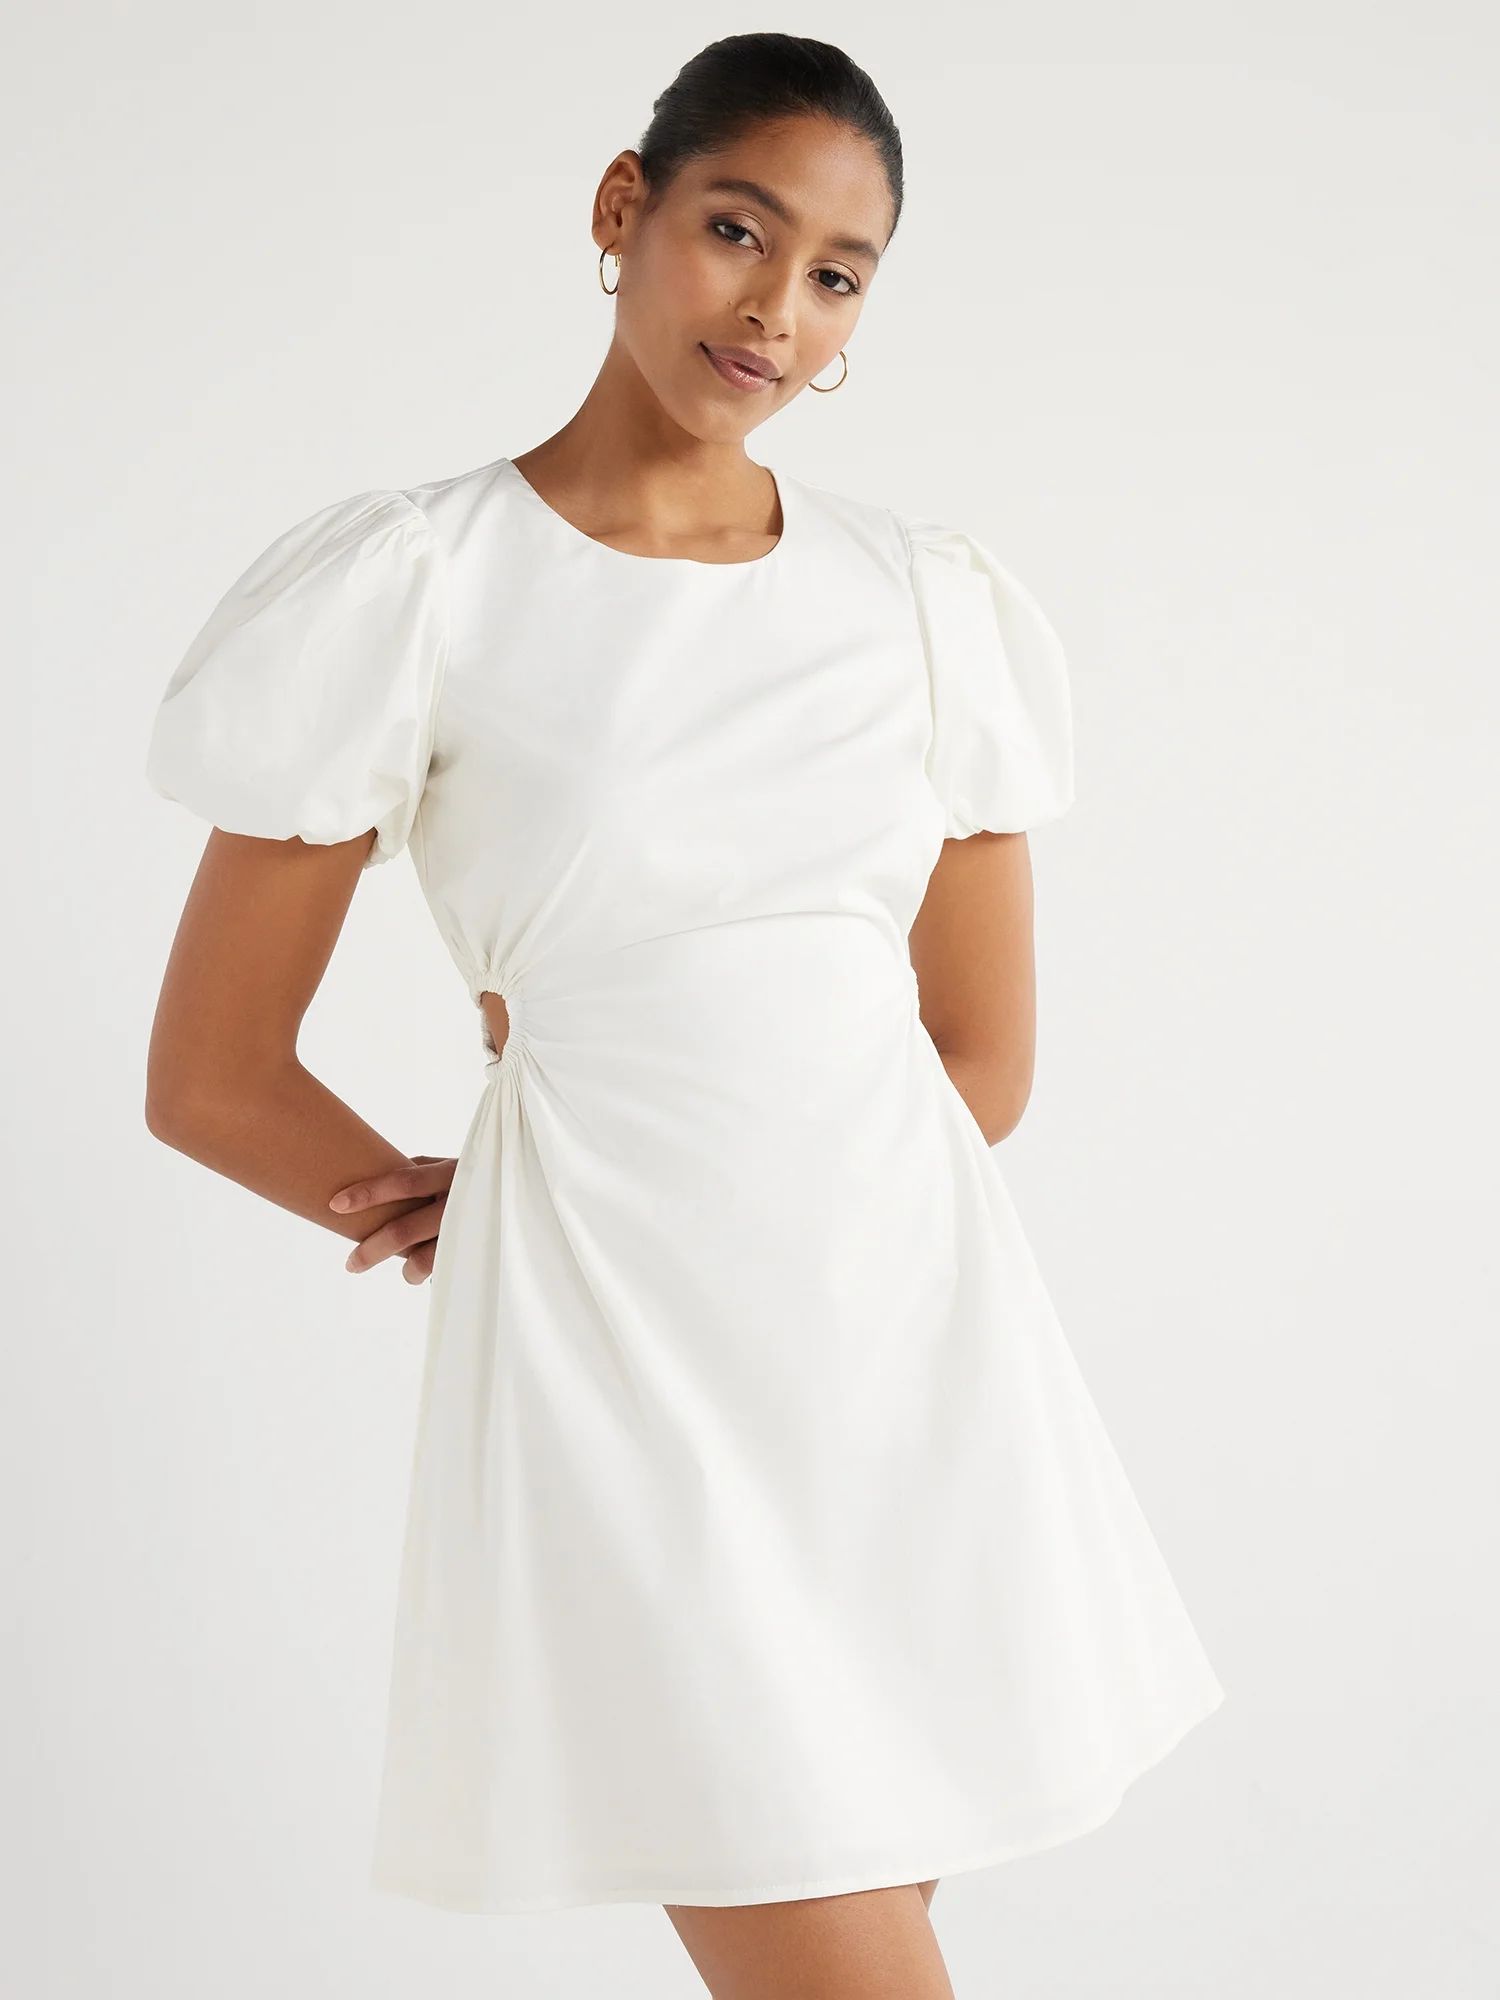 Scoop Women’s Cutout Poplin Dress with Puff Sleeves, Sizes XS-XXL Plus Size White Dress  | Walmart (US)